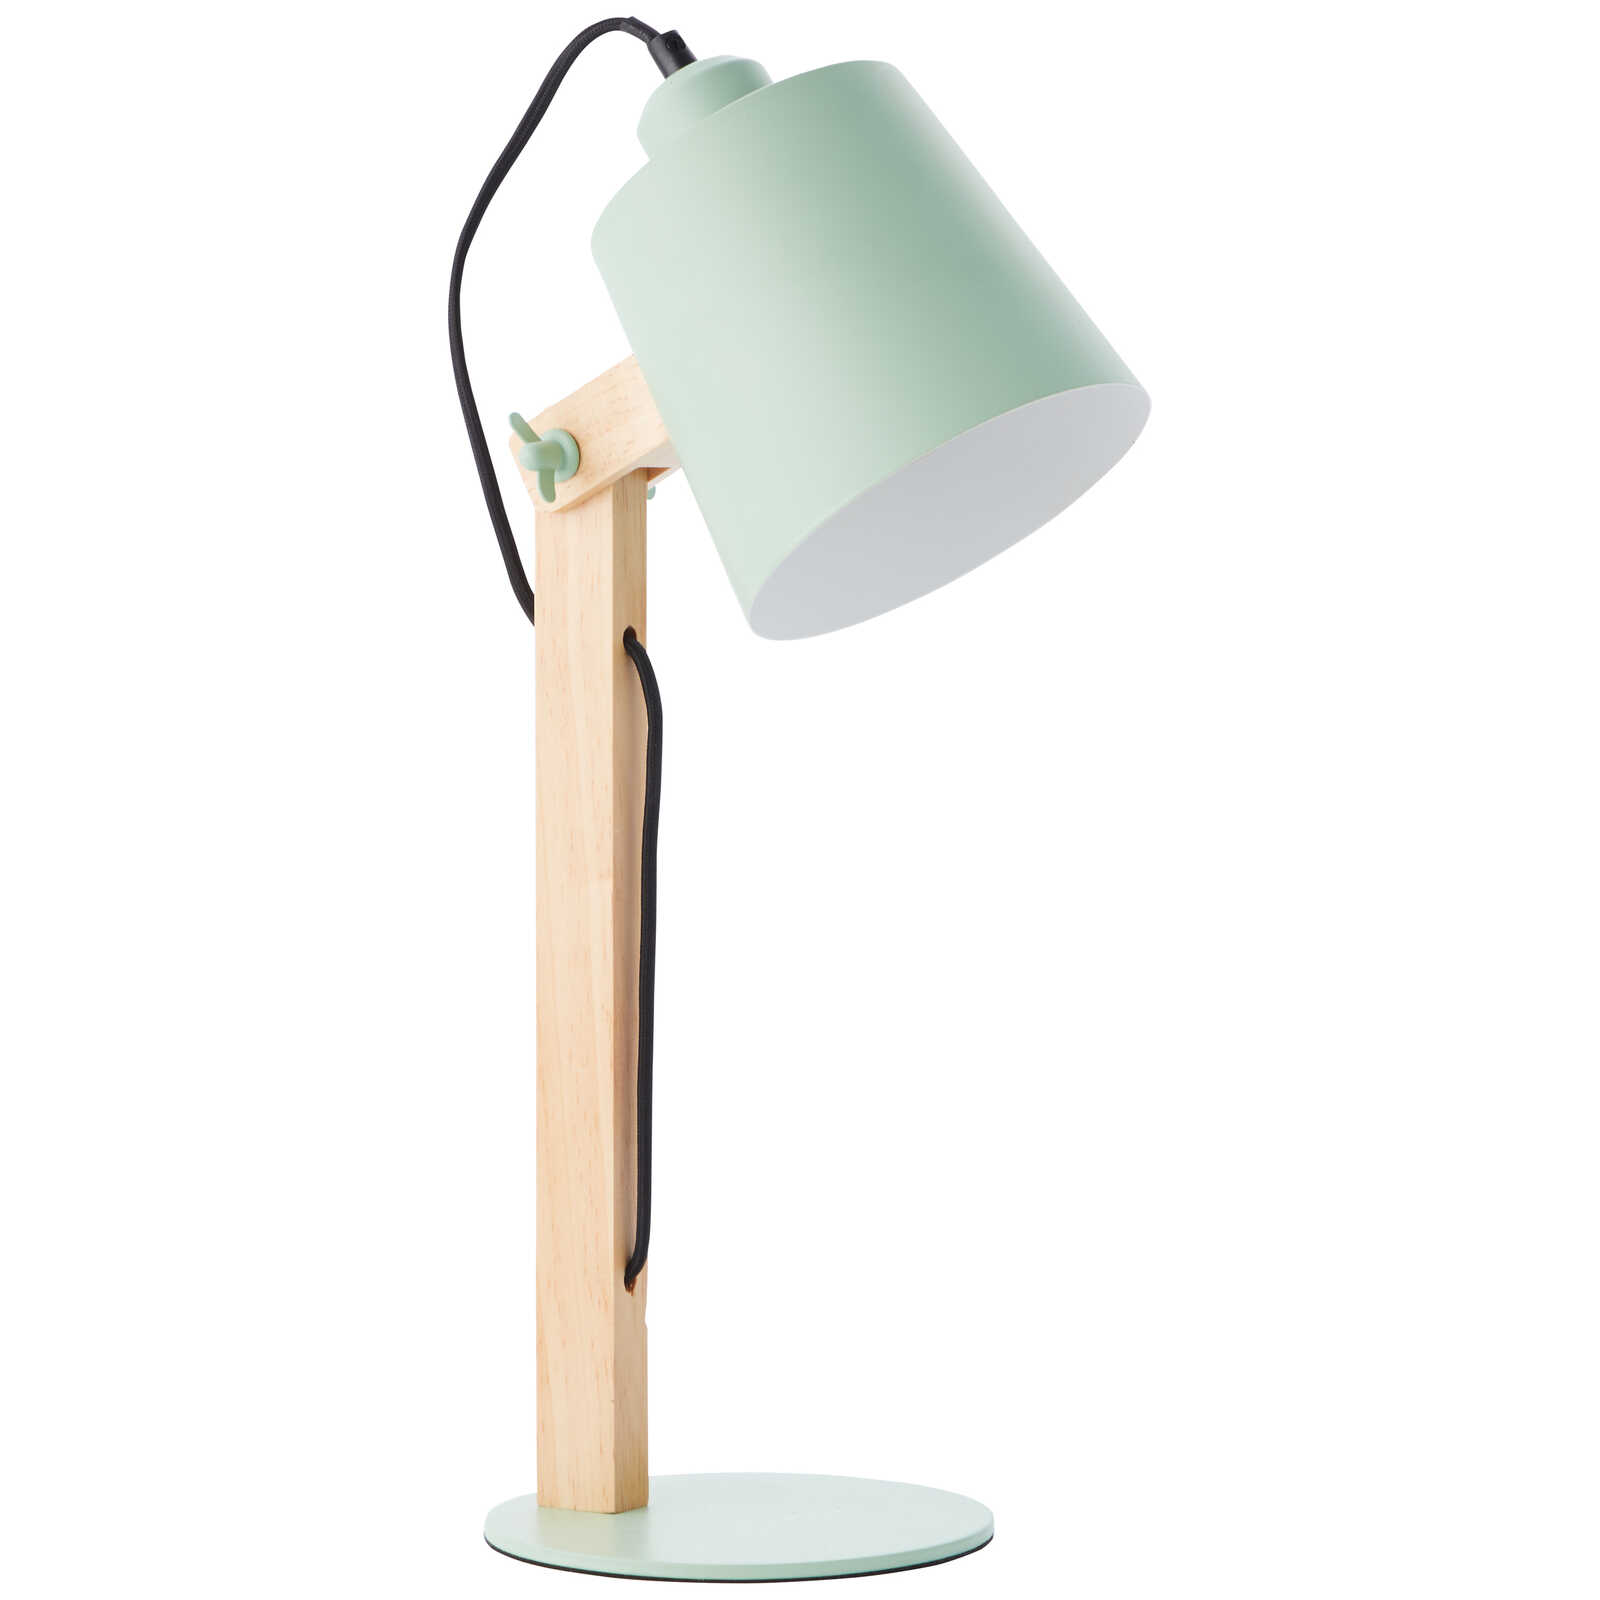             Houten tafellamp - Paul 1 - Groen
        